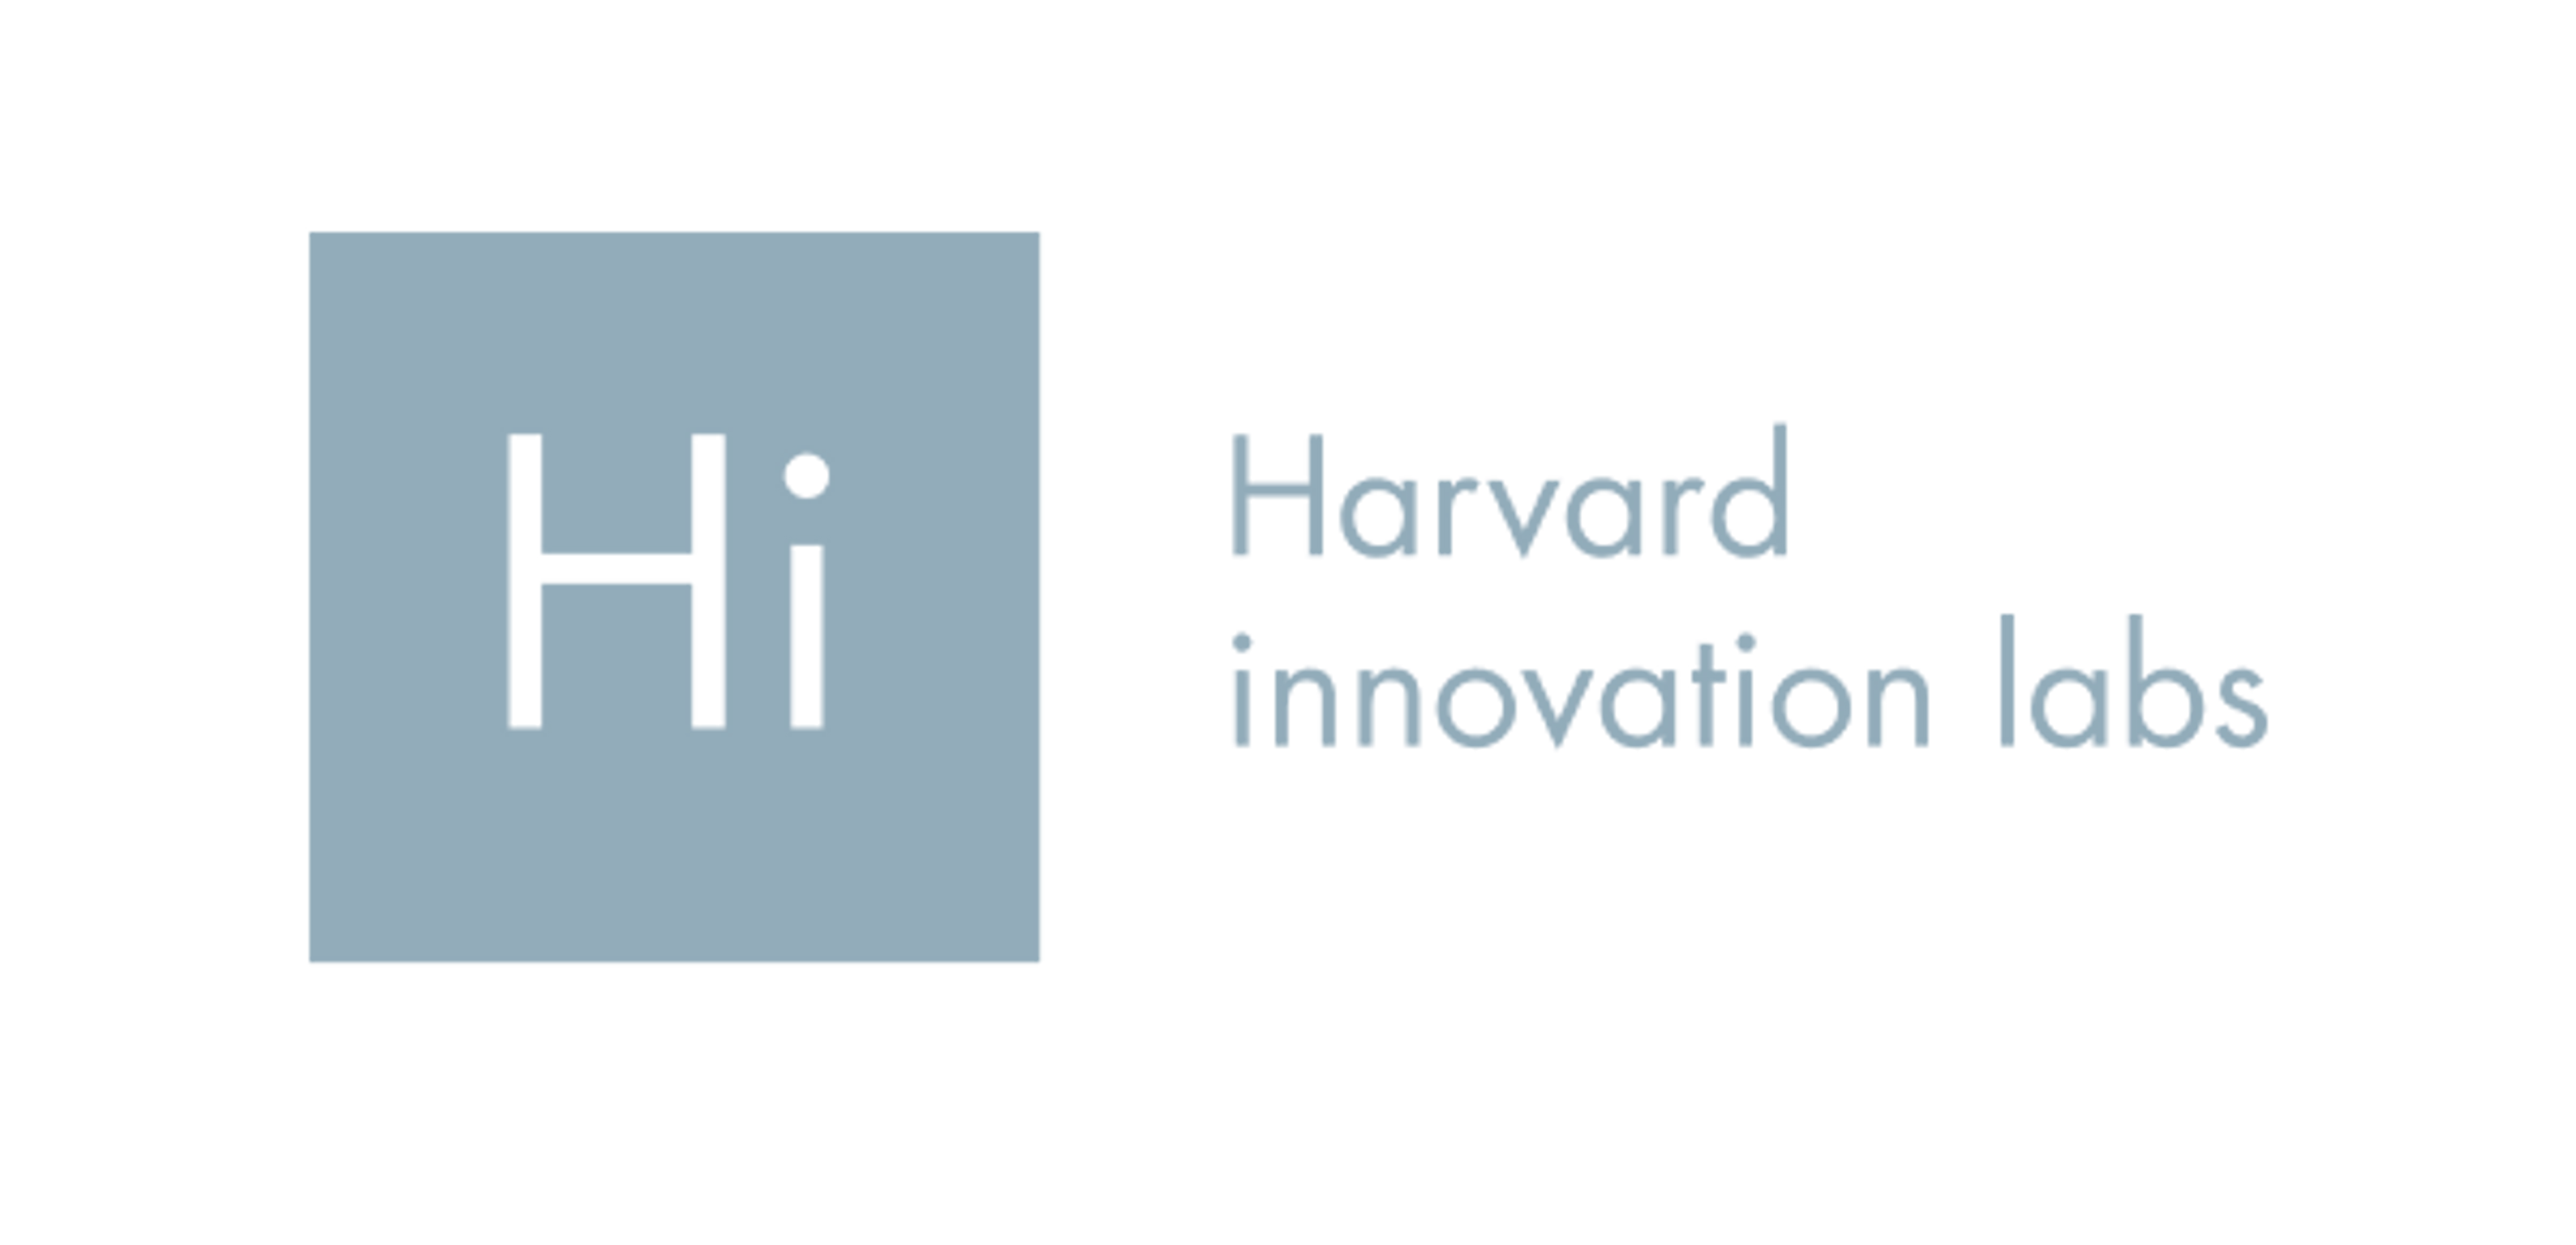 Harvard Innovation labs